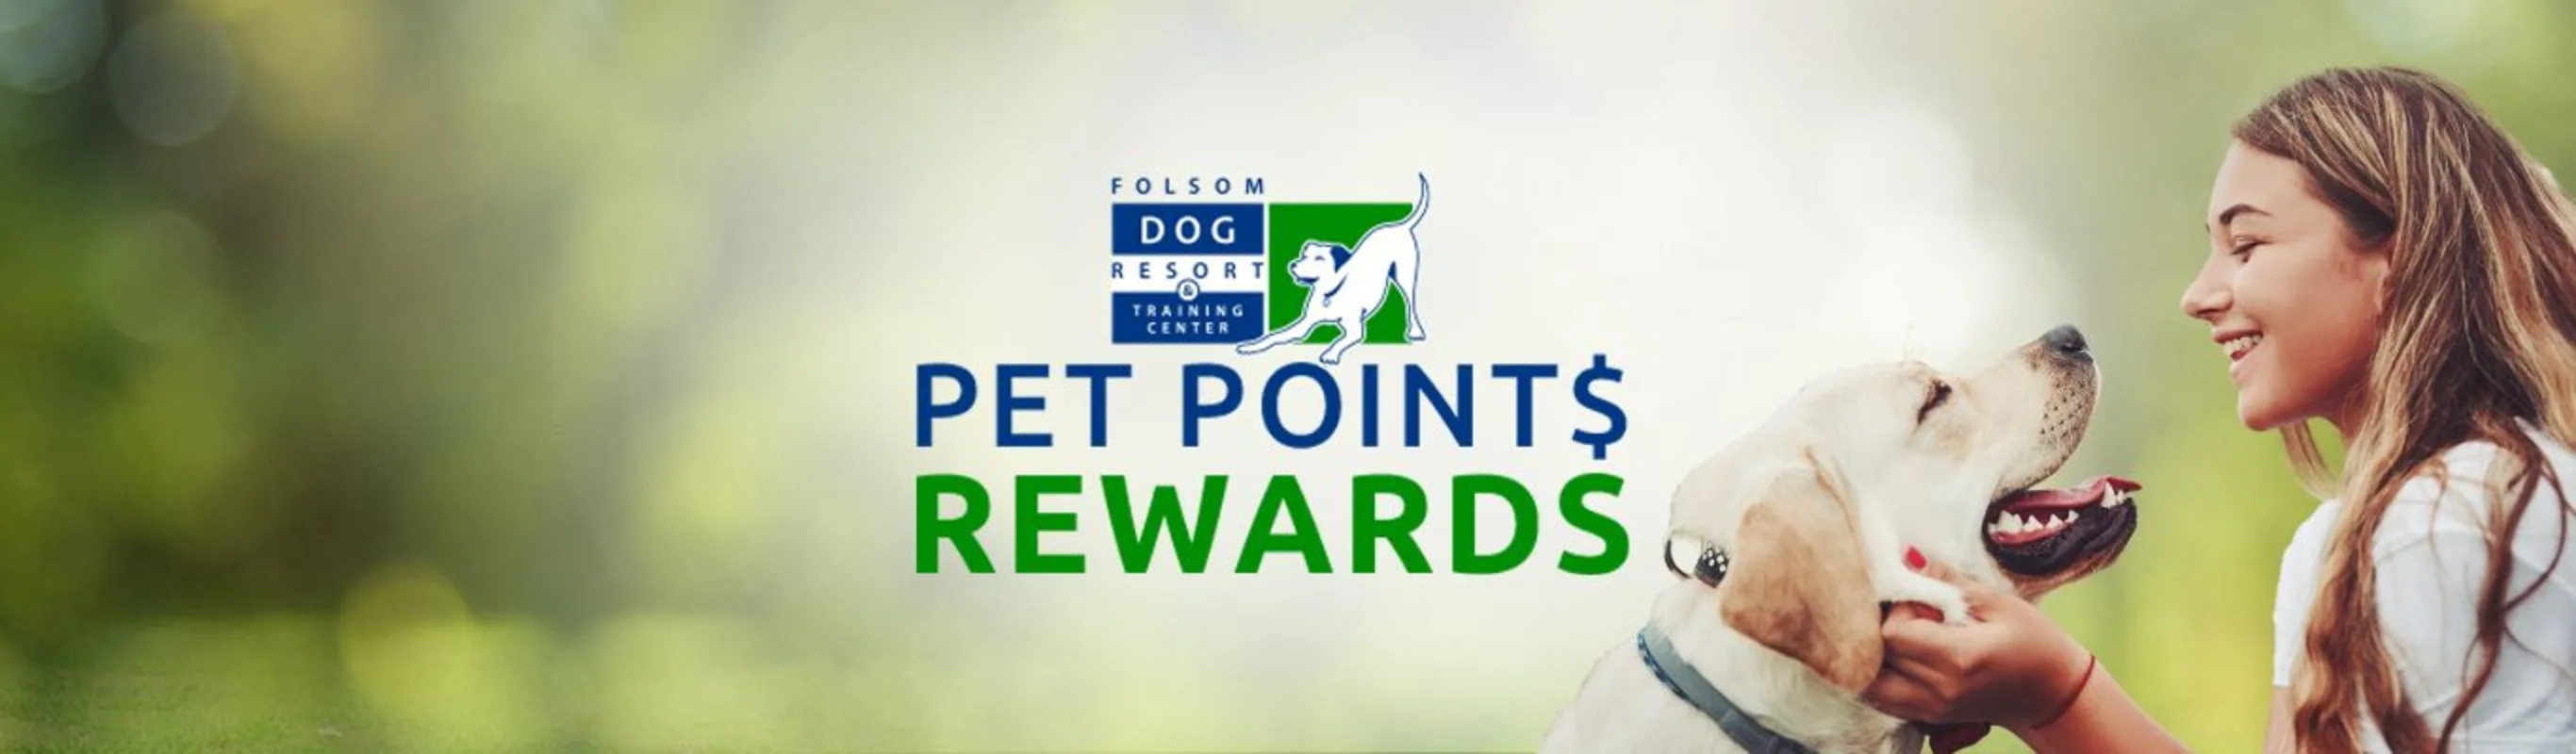 Folsom Dog Resort & Training Center - Loyalty Rewards